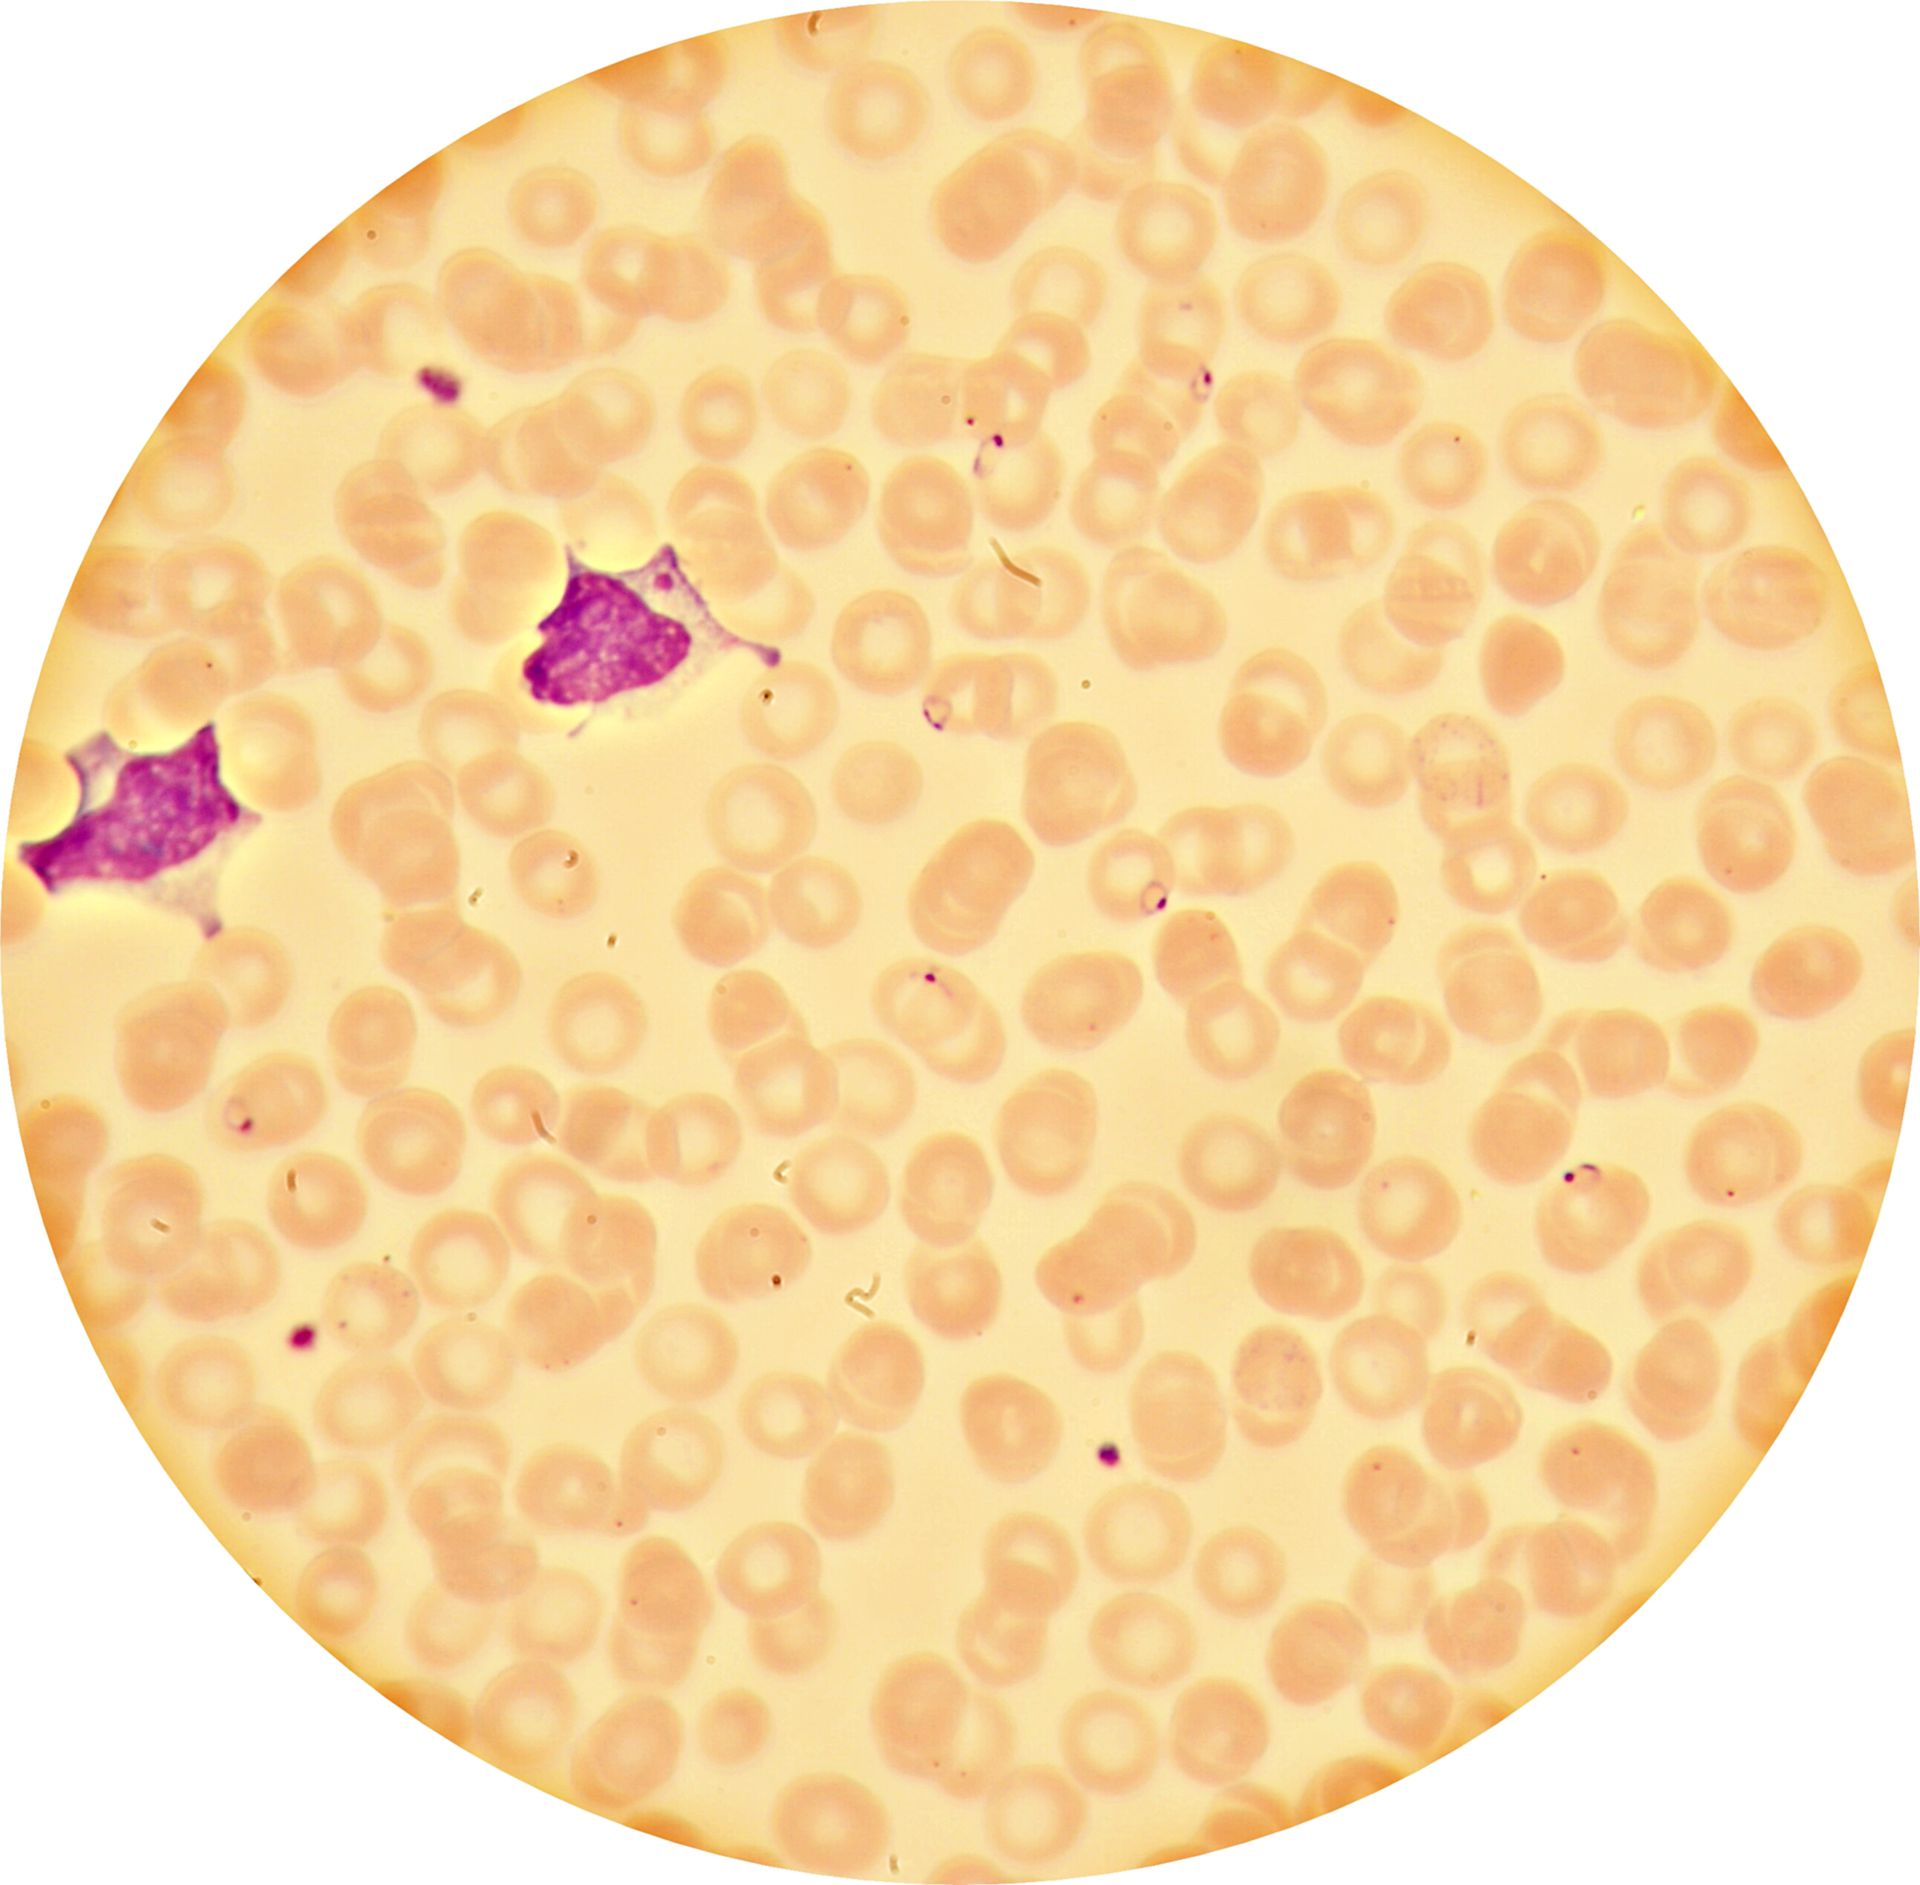 Malaria tropica (blood smear)